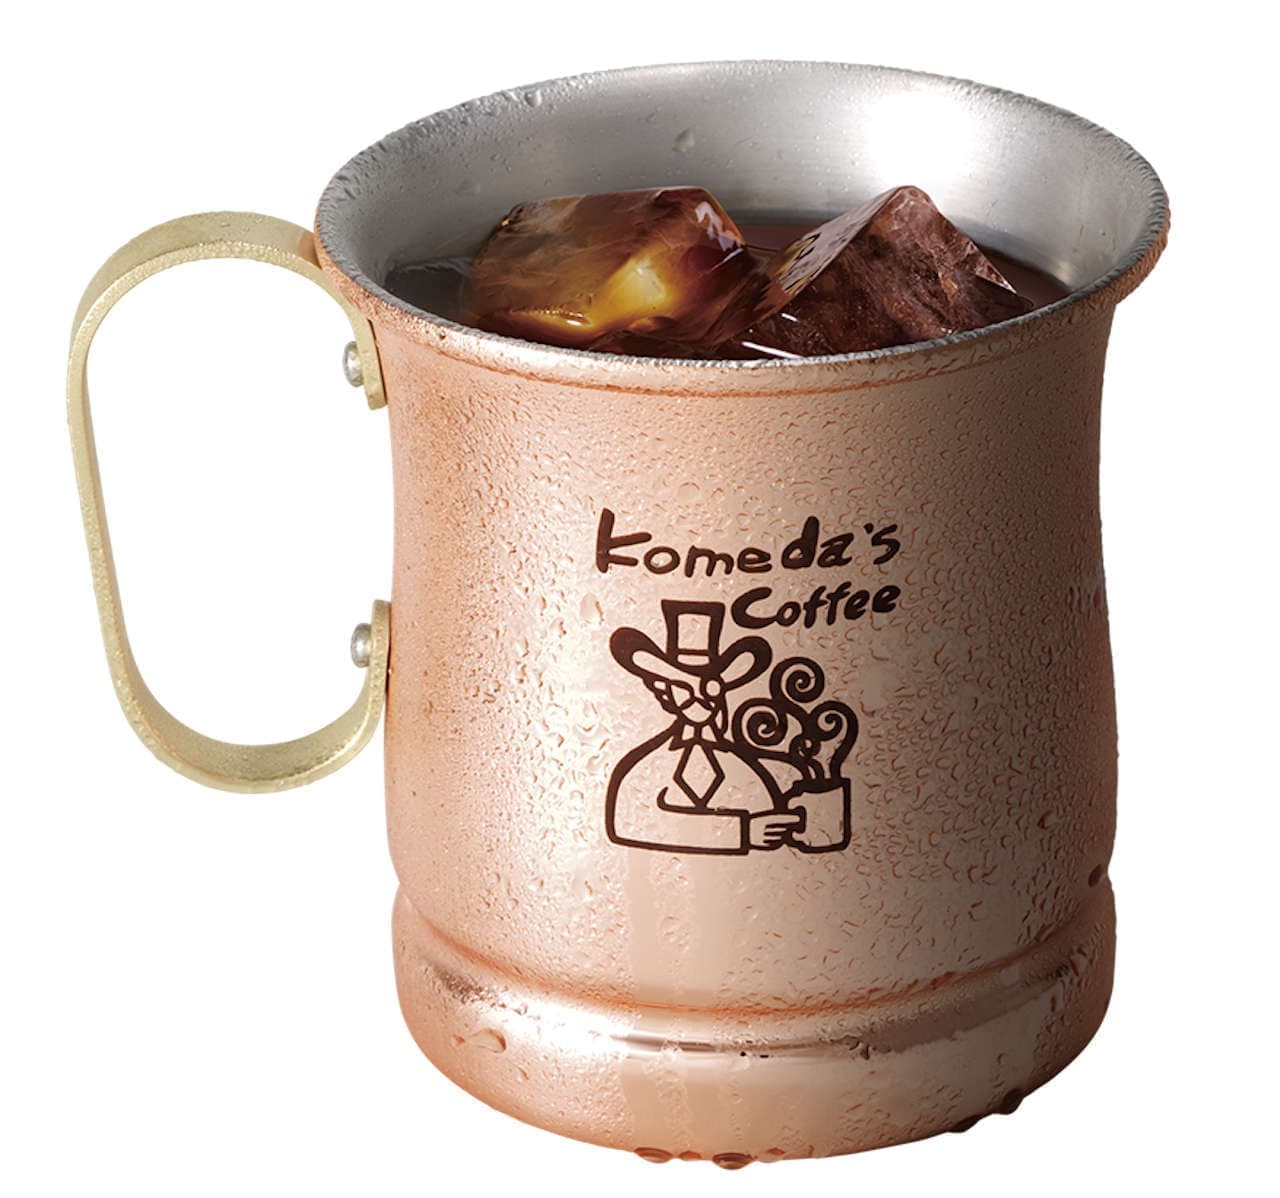 Komeda Coffee "Golden Iced Coffee" renewed.